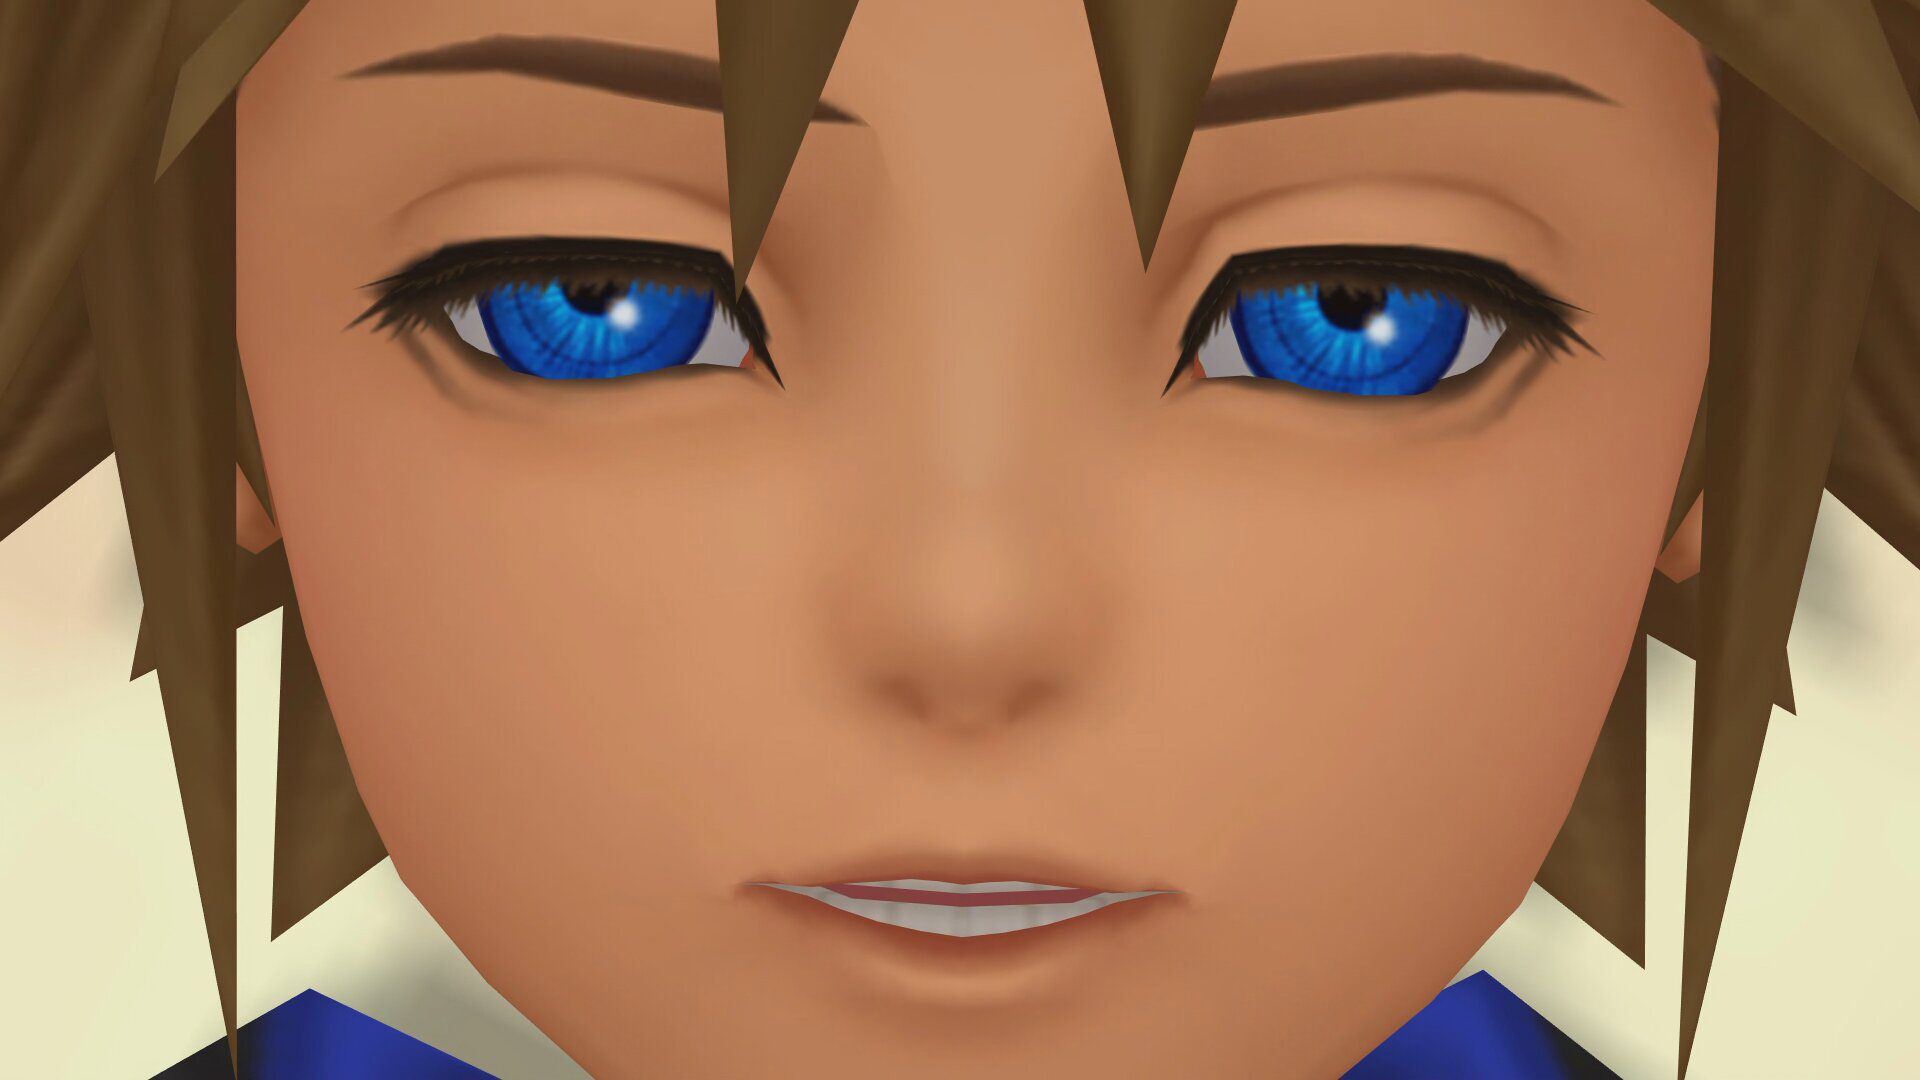 Kingdom Hearts MIX expression of Sora